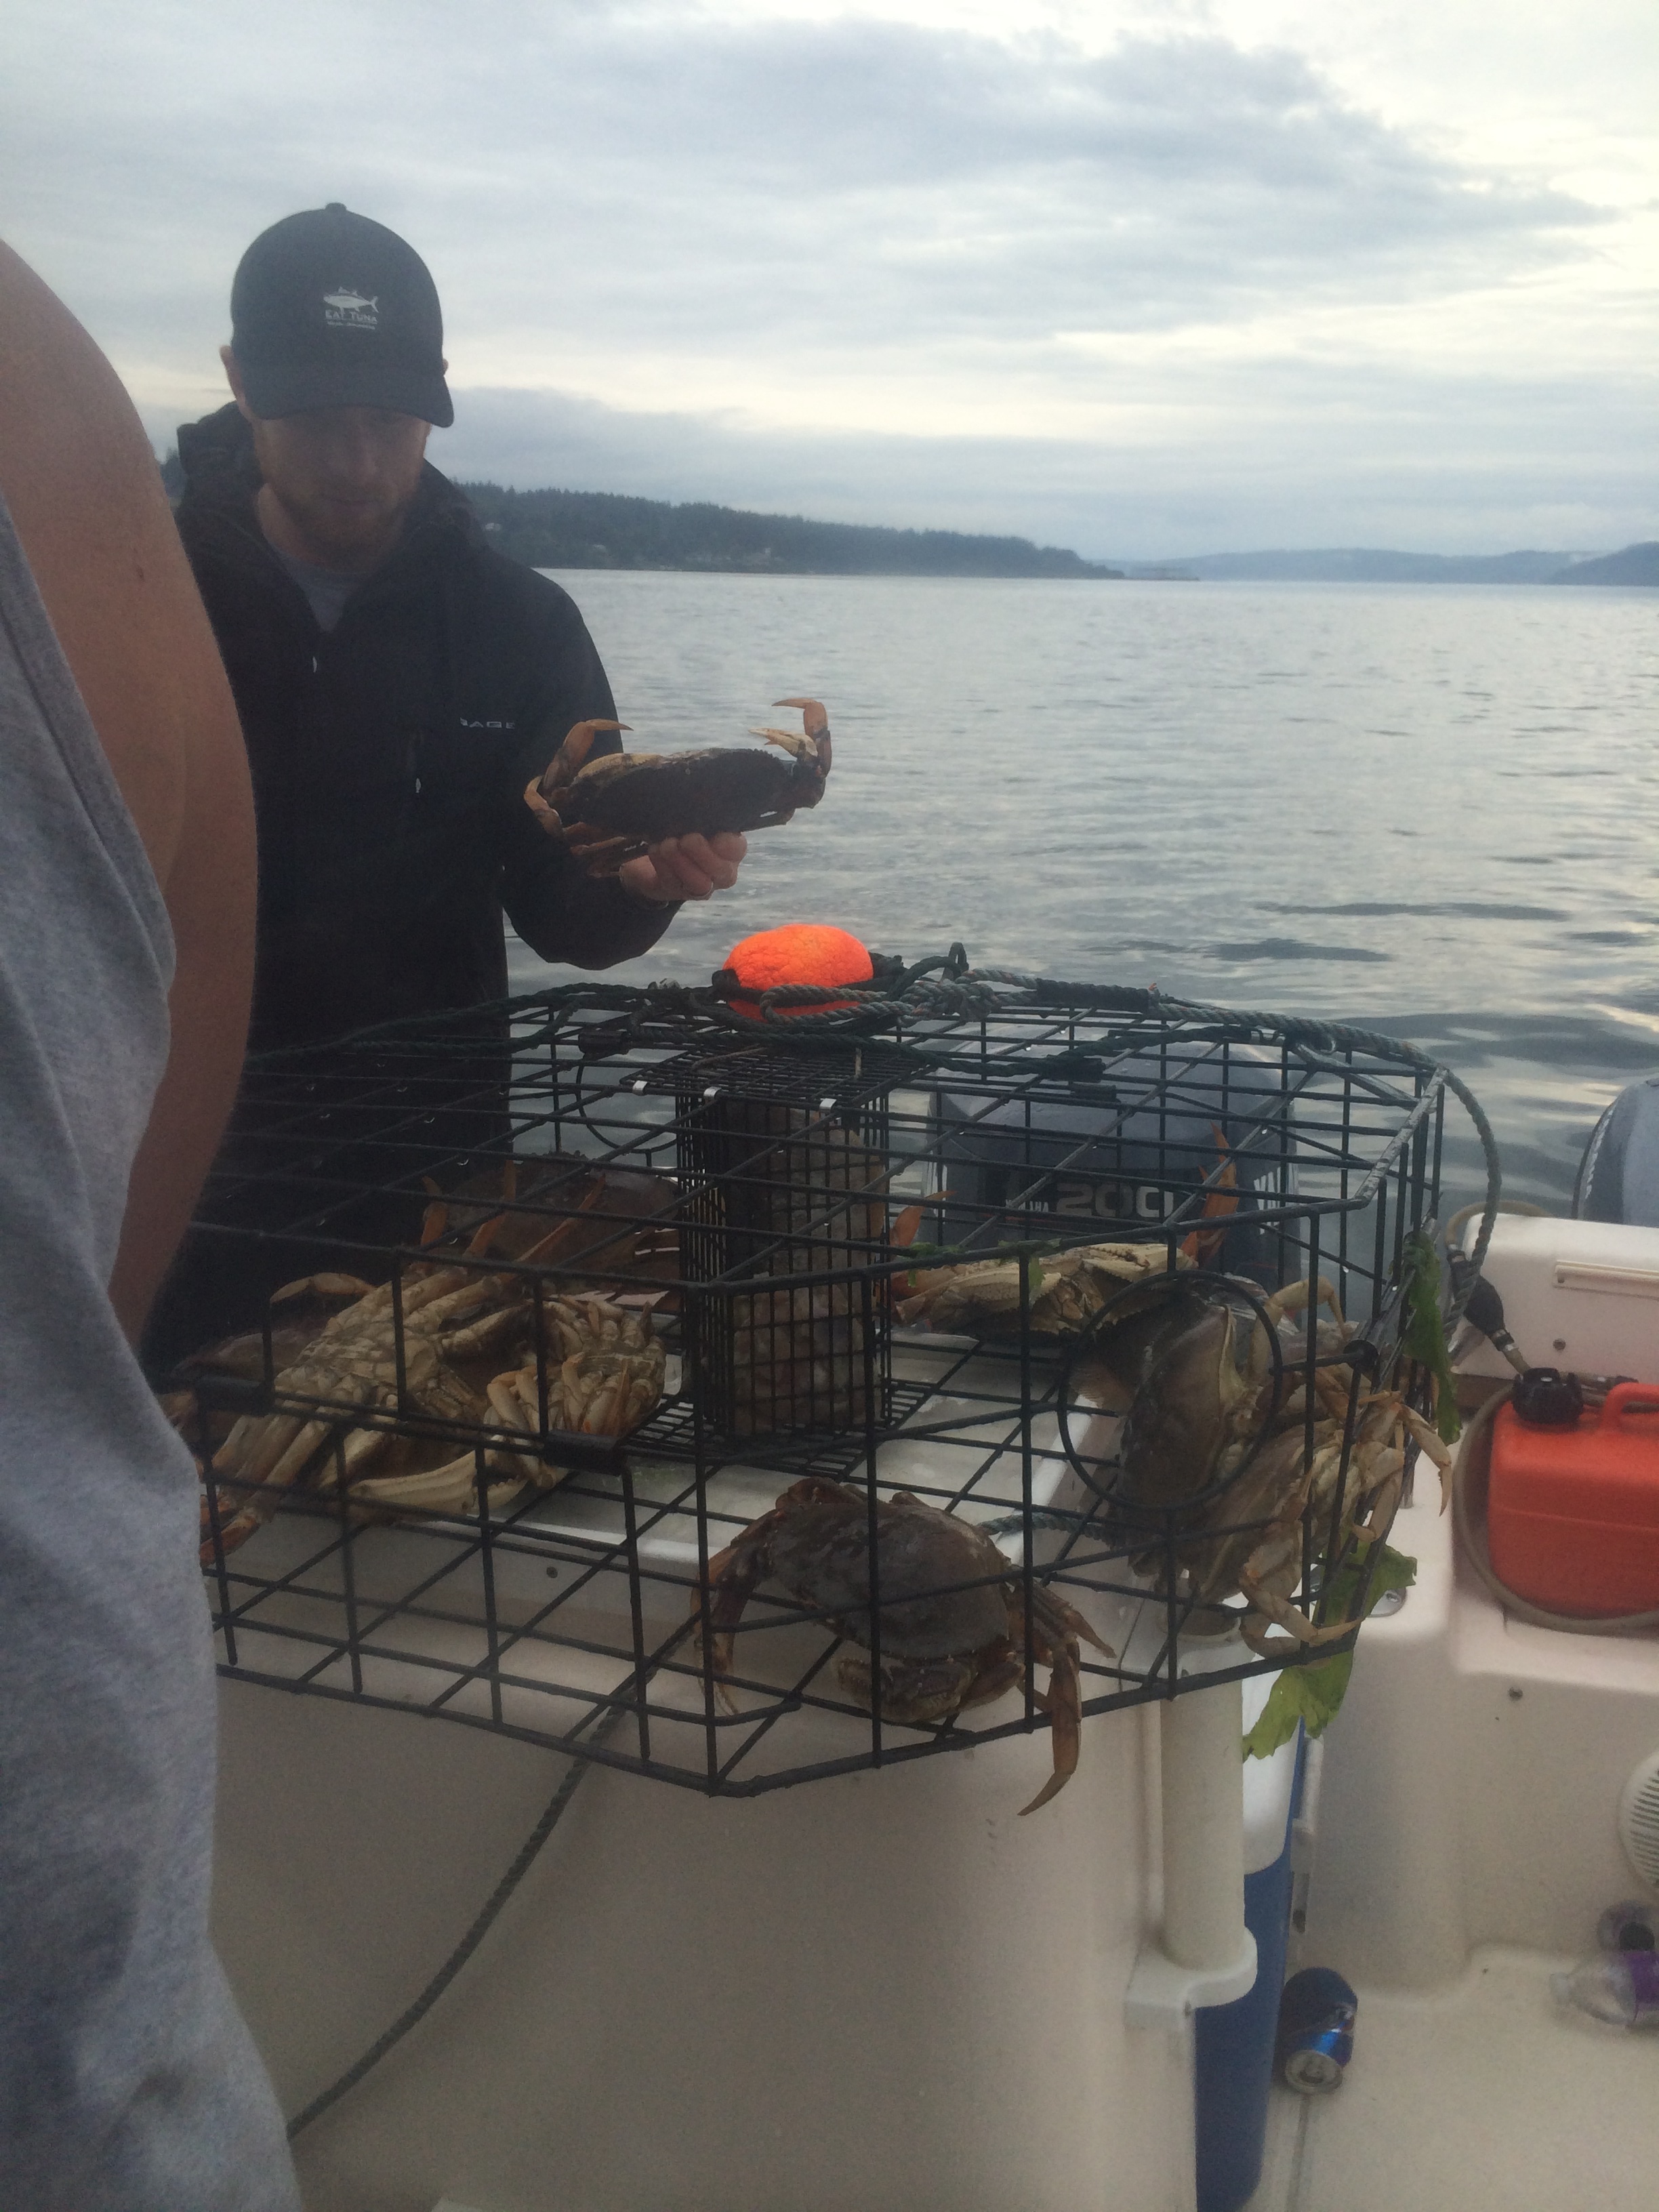 Crabbing in WA